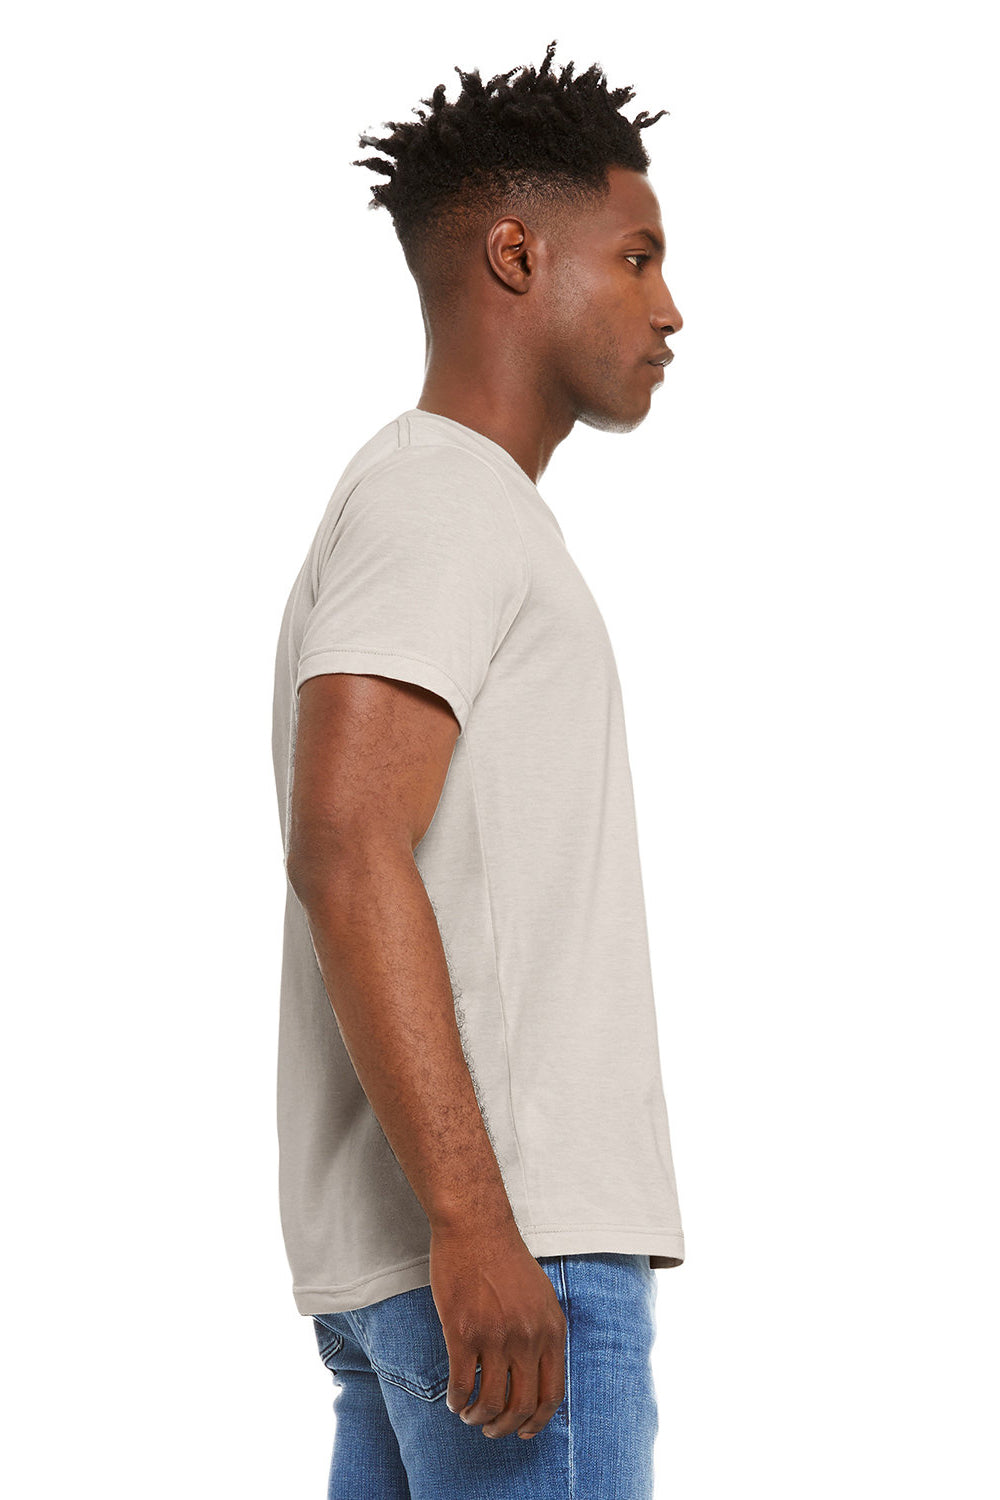 Bella + Canvas BC3005CVC Mens CVC Short Sleeve V-Neck T-Shirt Heather Dust Model Side